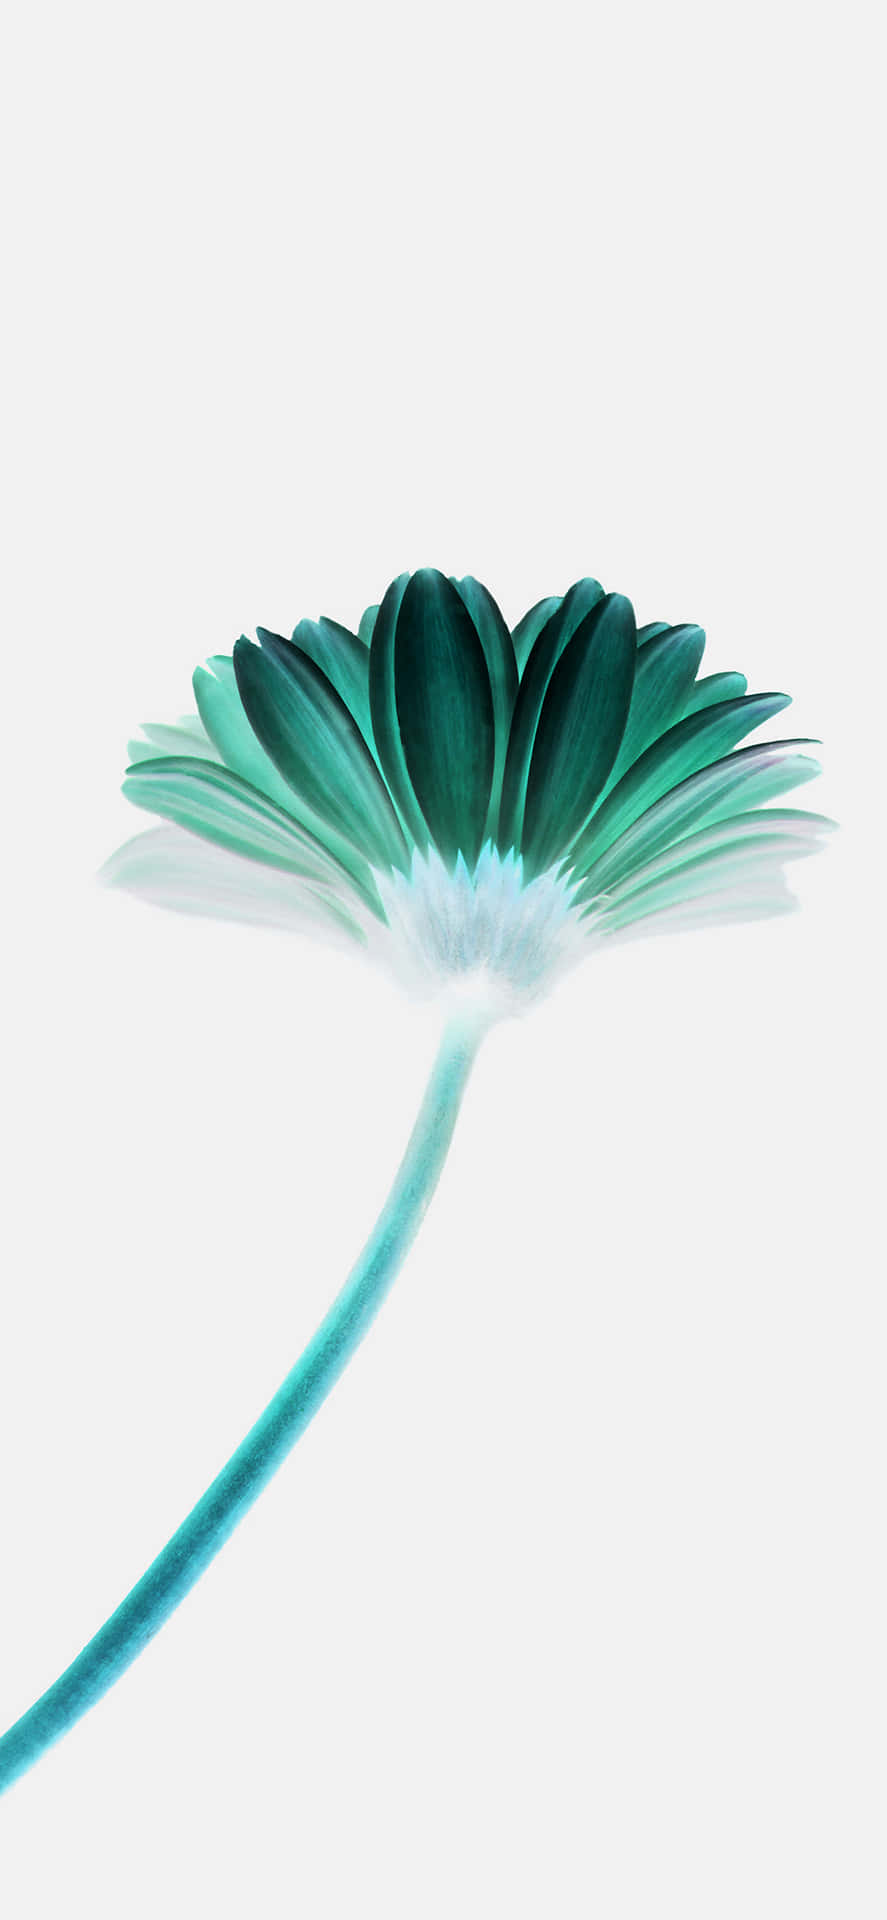 A Flower With A Blue Stem Wallpaper